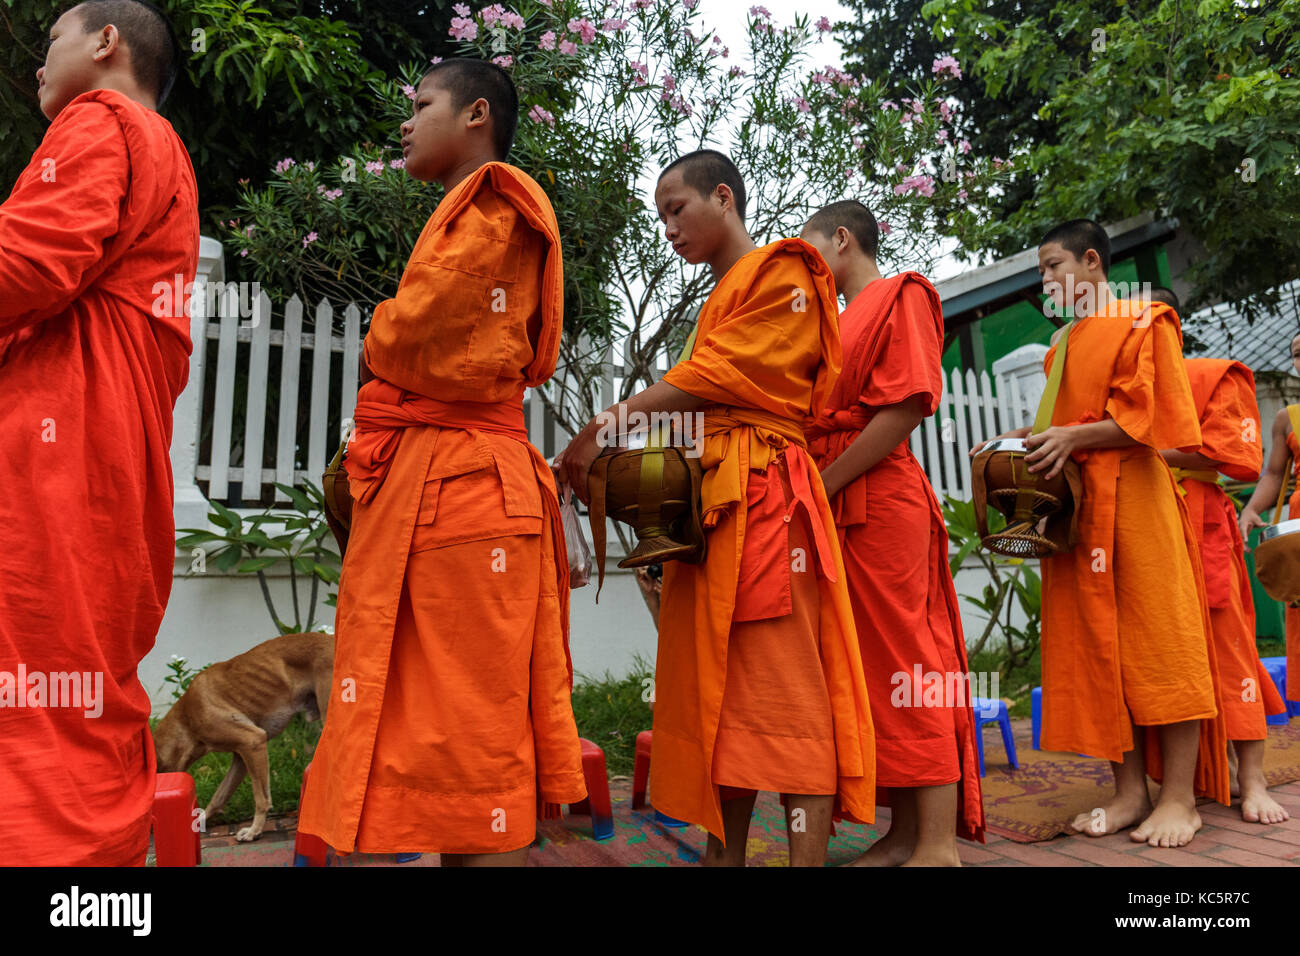 LUANG PRABANG, LAOS - 9/23/2017: Buddhist monks collect alms in Luang Prabang, Laos Stock Photo